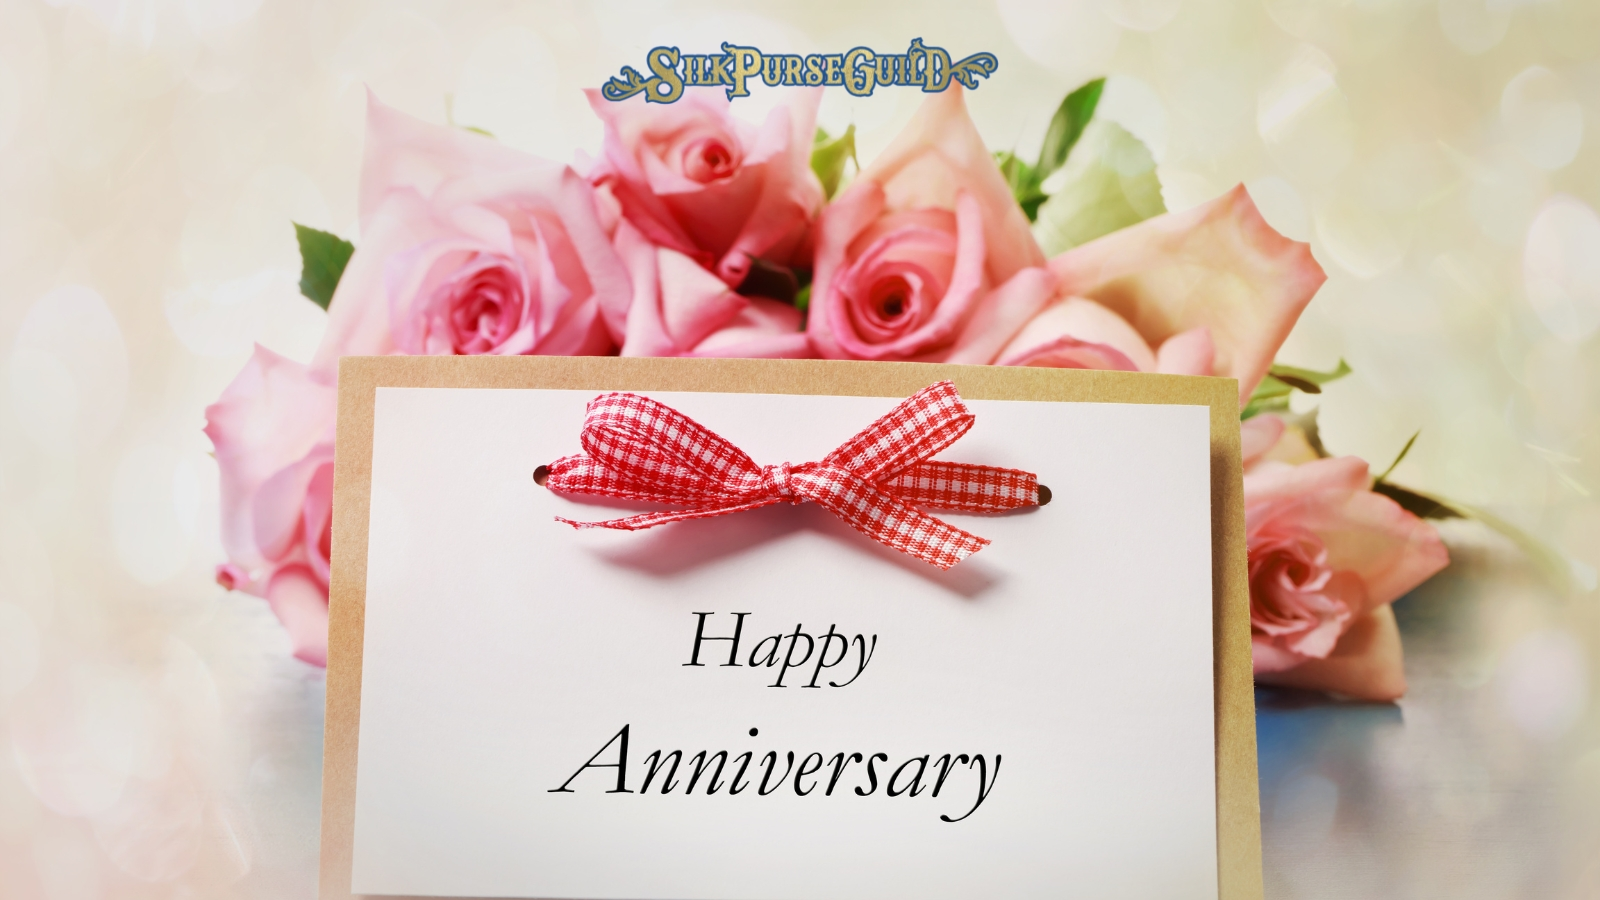 Memories of Us - First Year Anniversary Photo Collage | Anniversary gifts,  Wedding anniversary gifts, Paper gifts anniversary